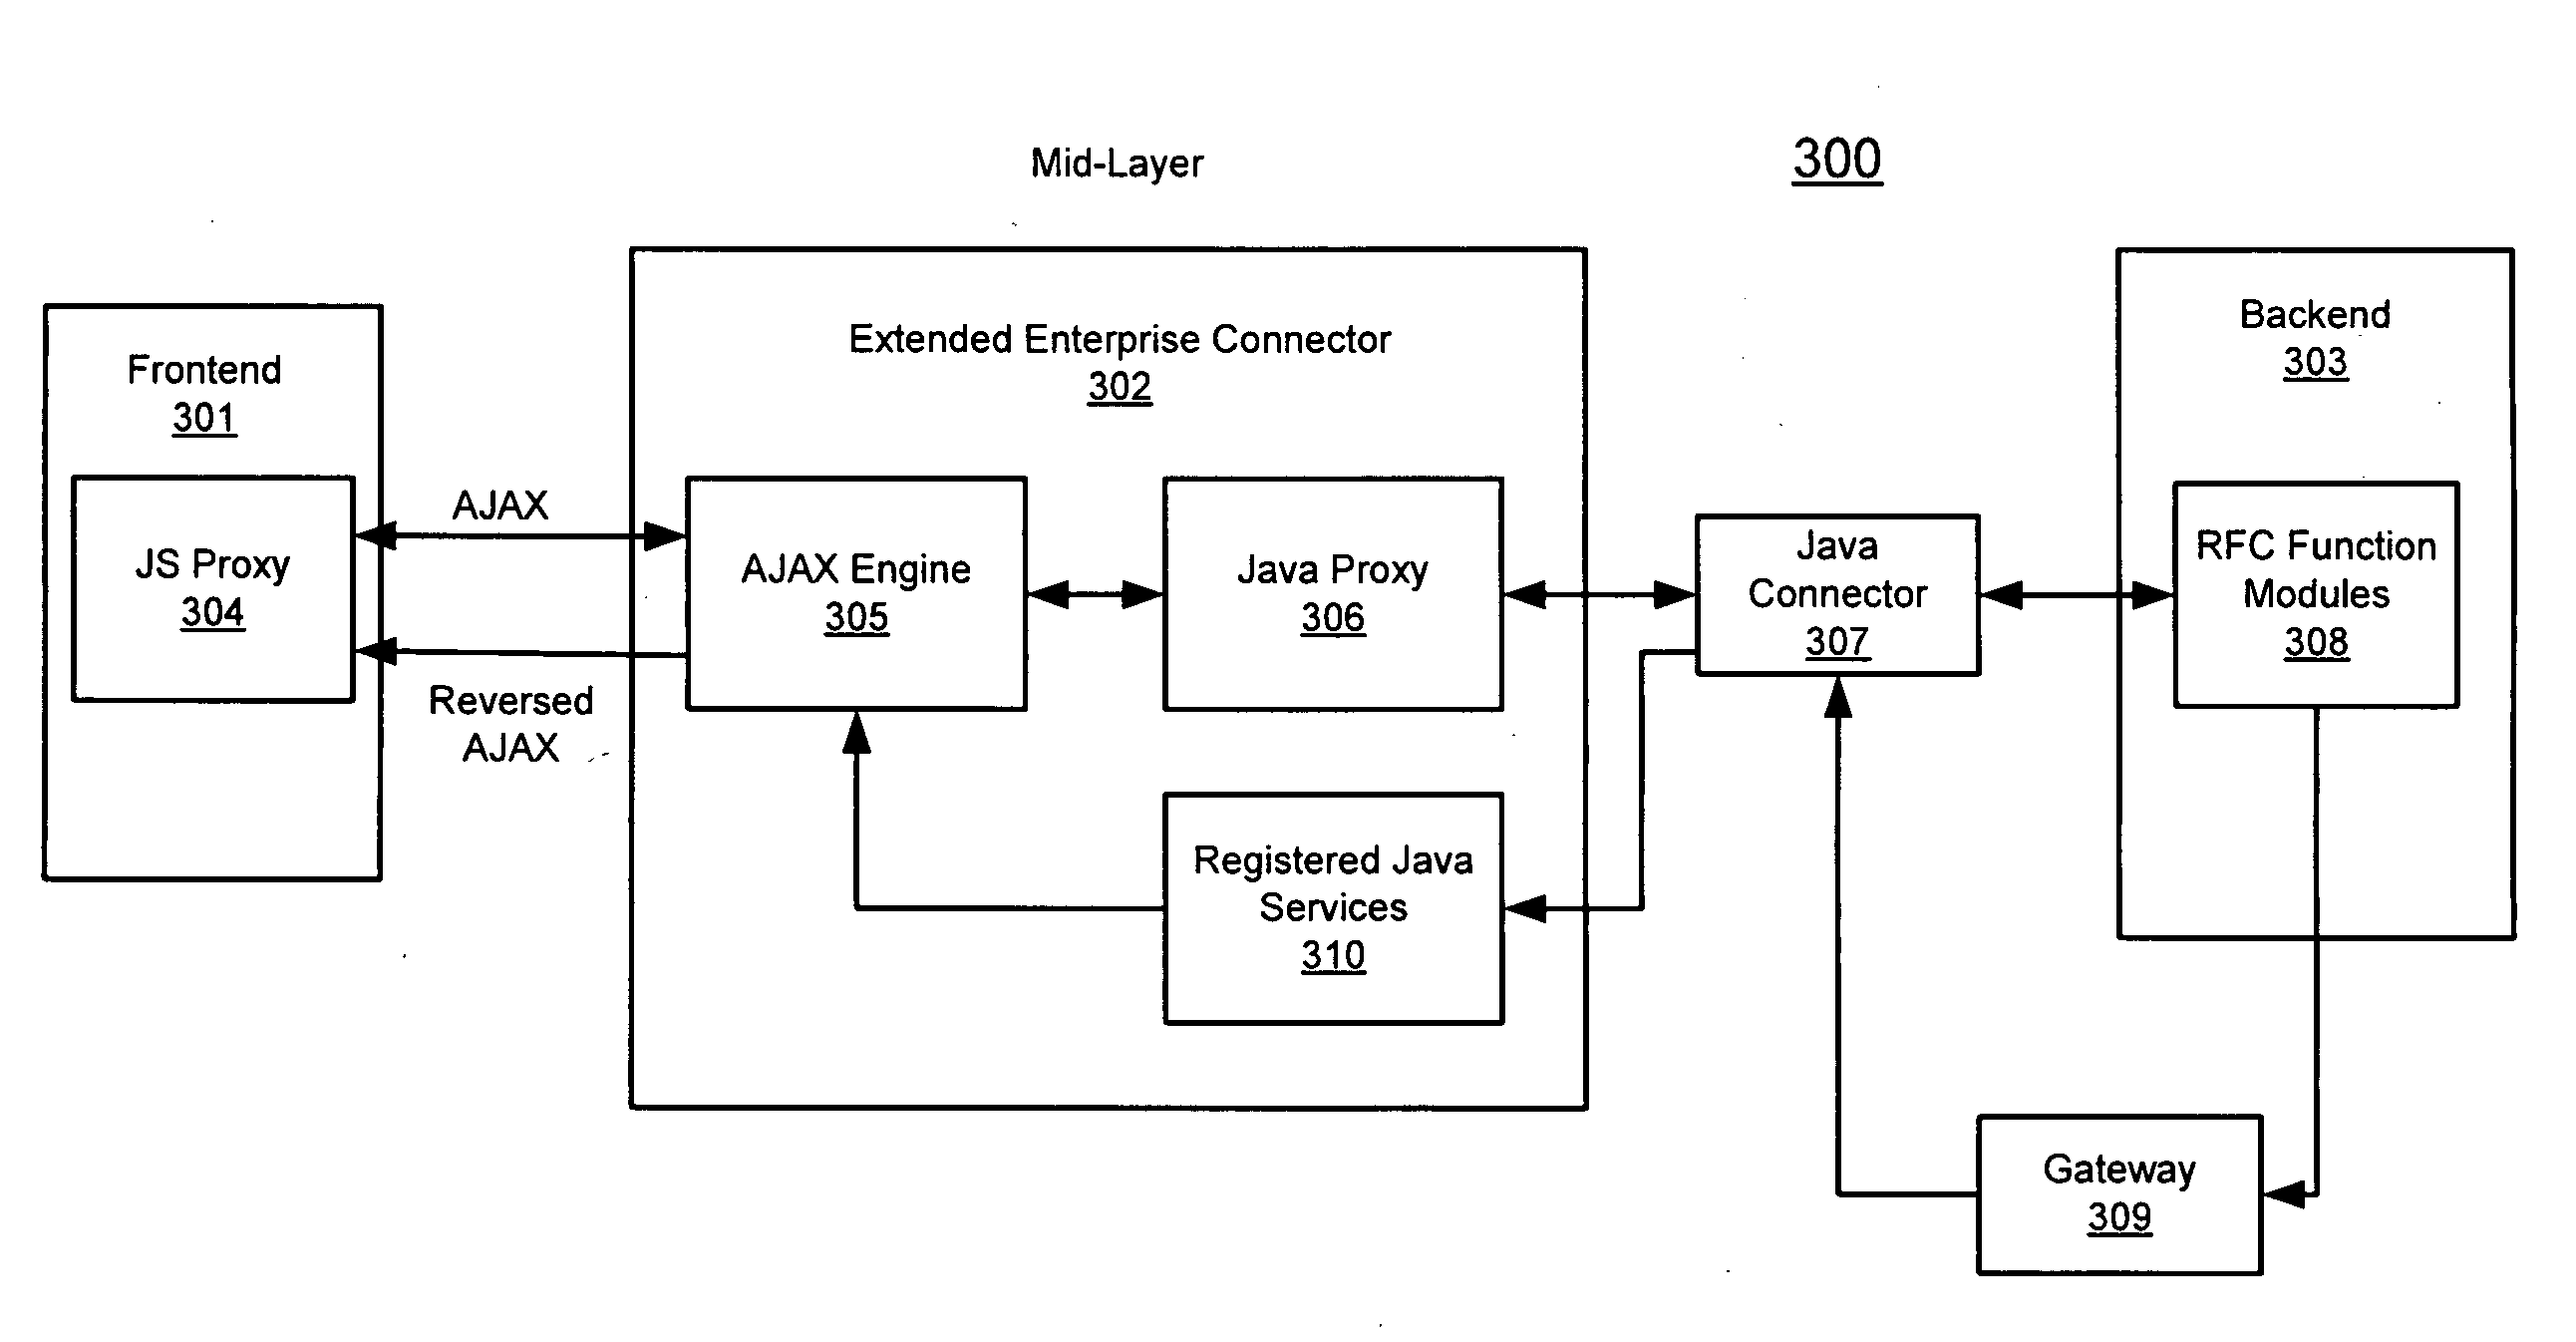 Extended enterprise connector framework using direct web remoting (DWR)